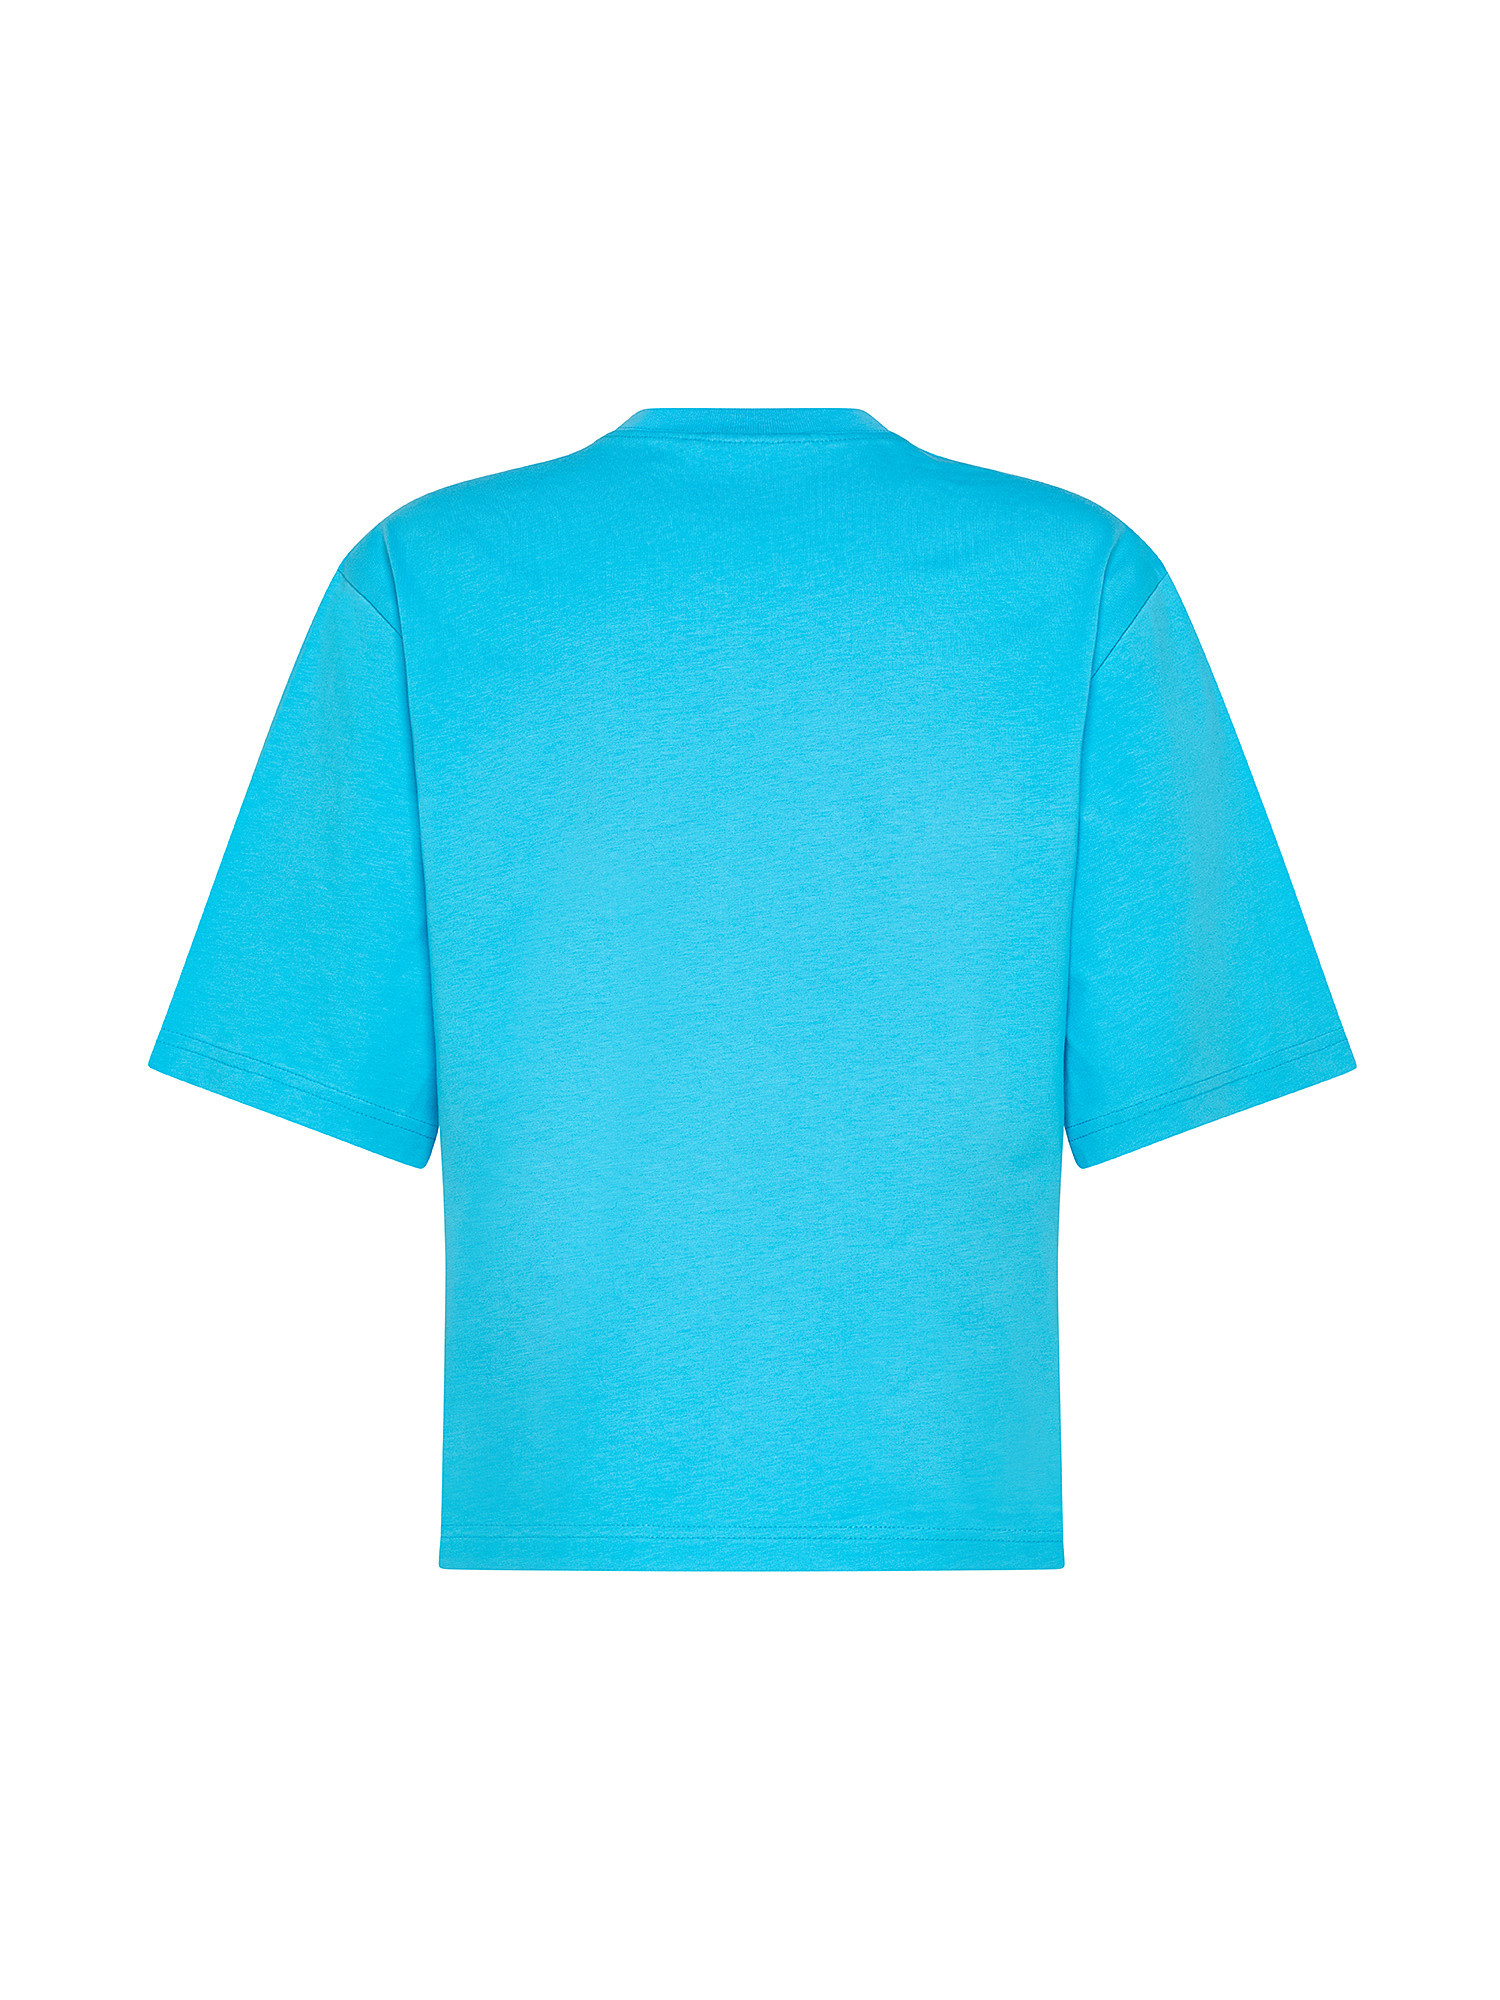 Eye Star T-shirt, Turquoise, large image number 1